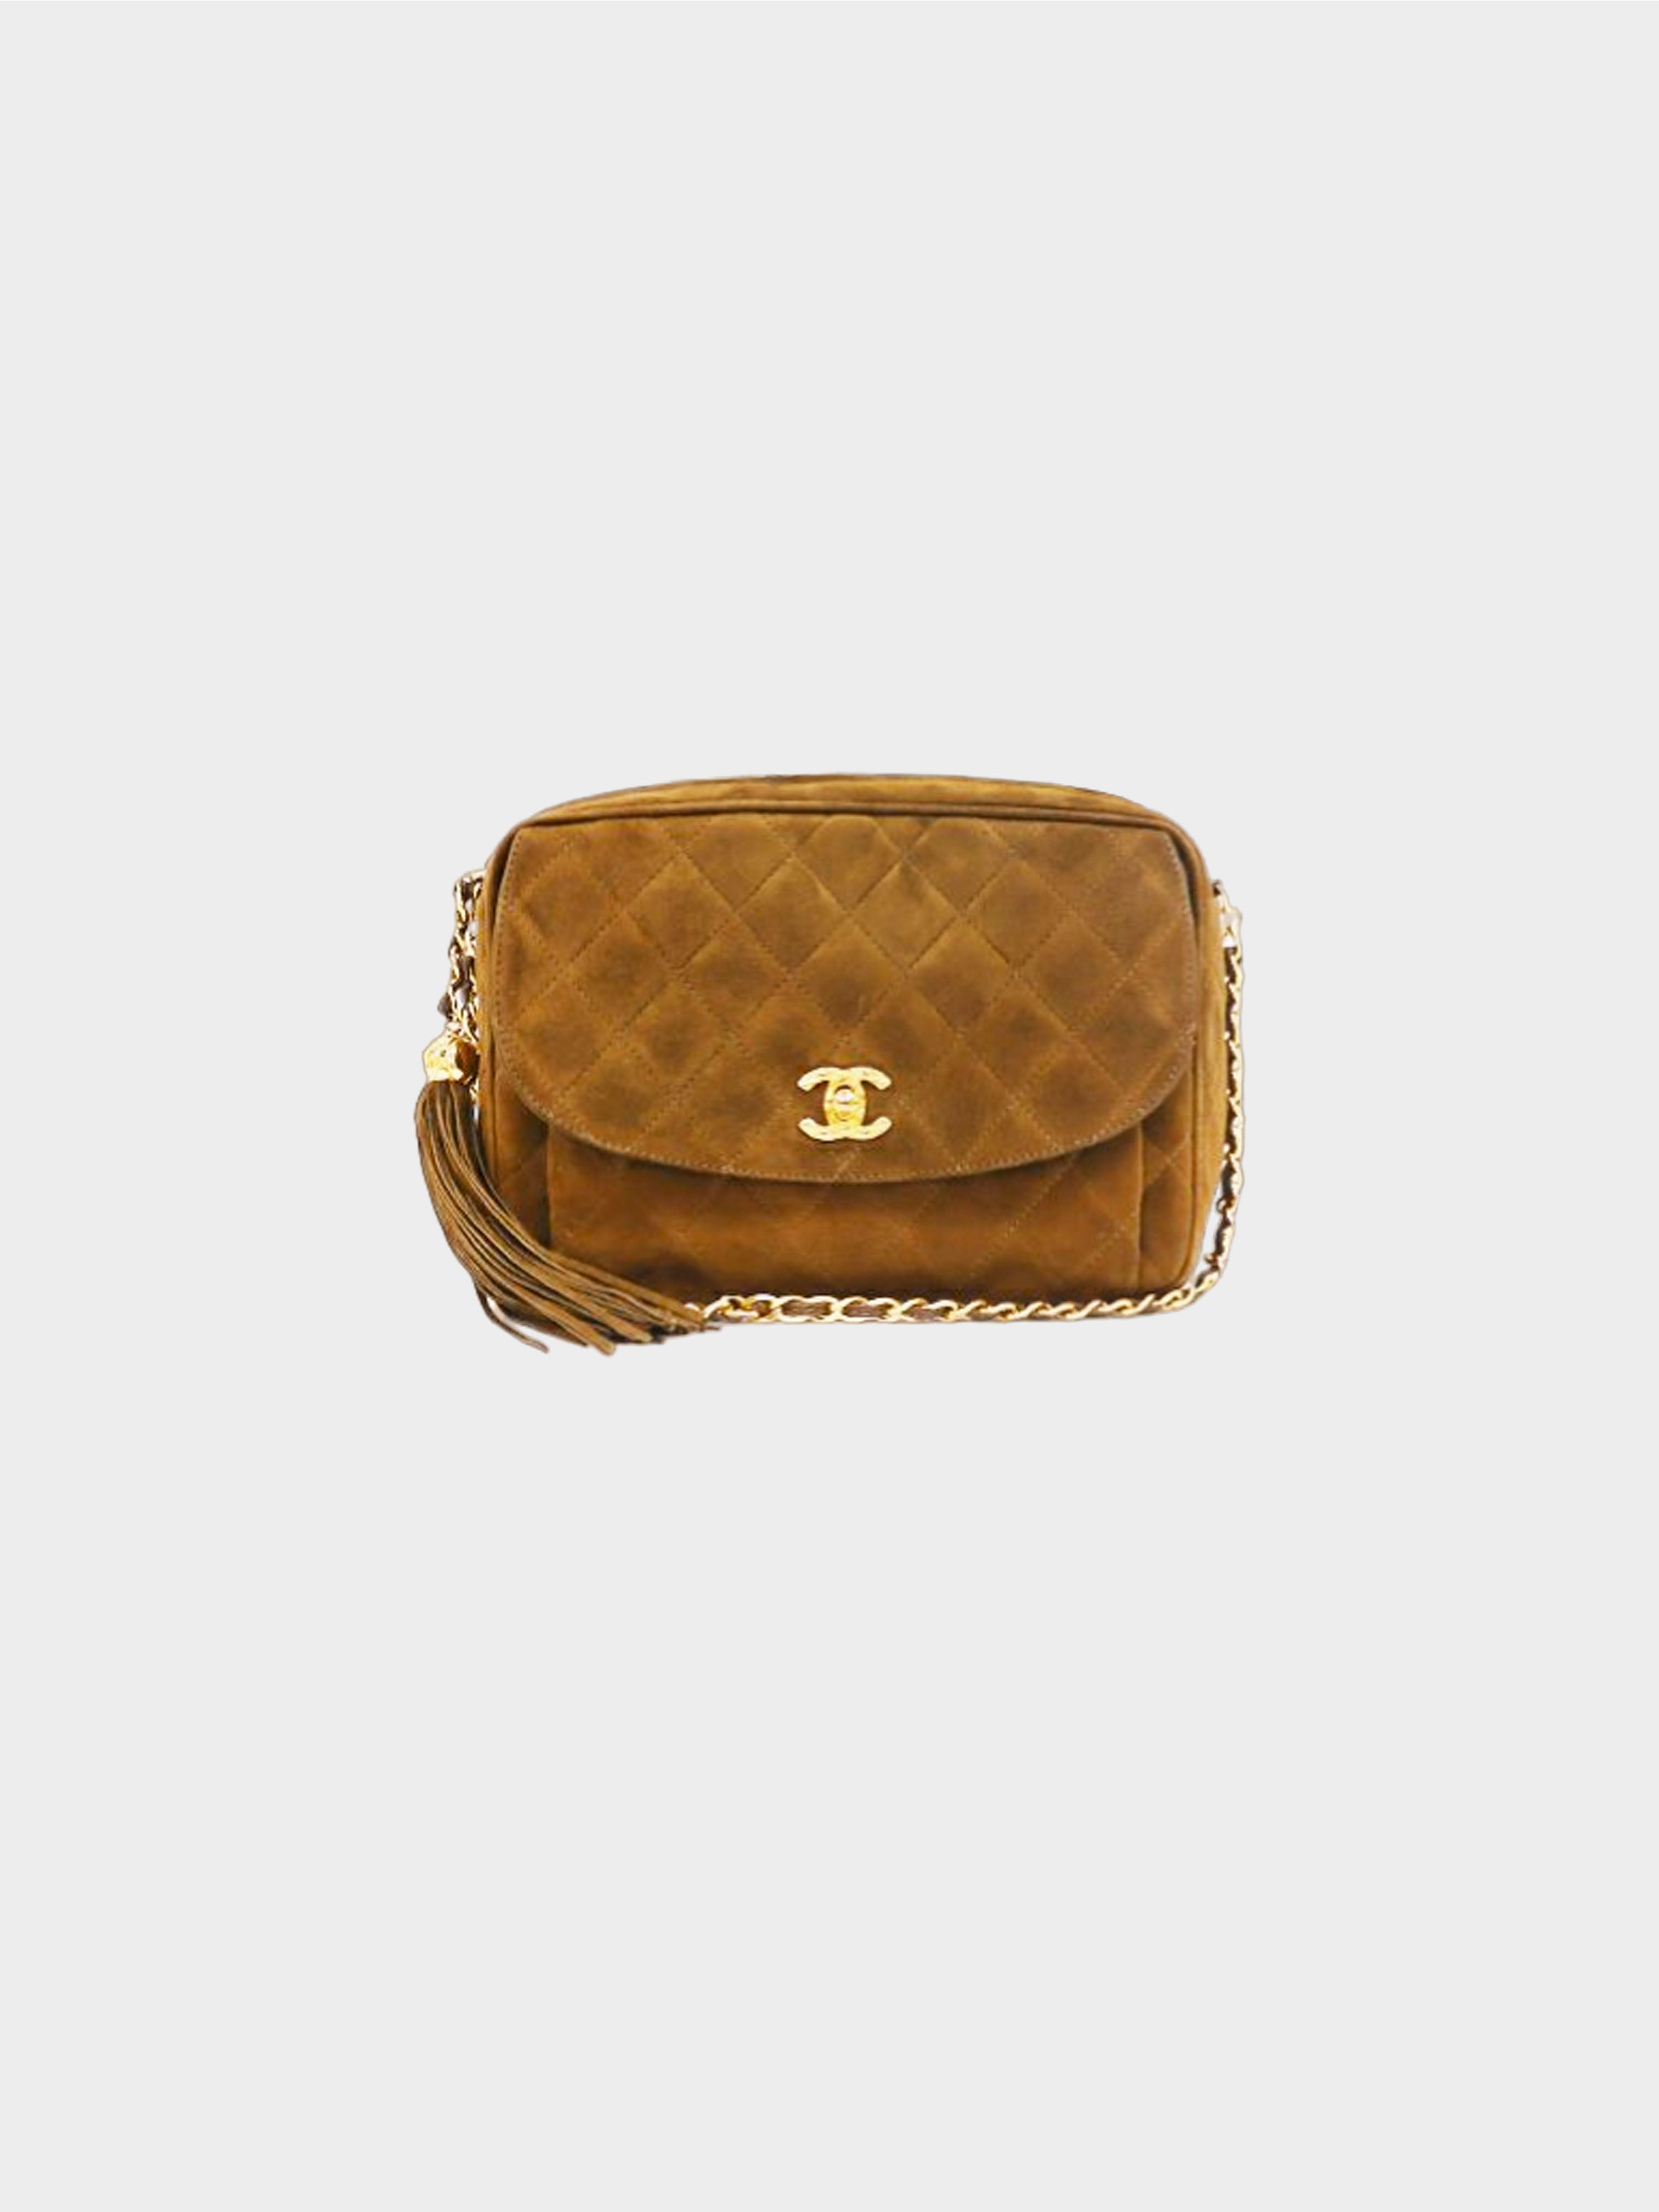 Chanel 1994 Satin 24K Gold Bag · INTO